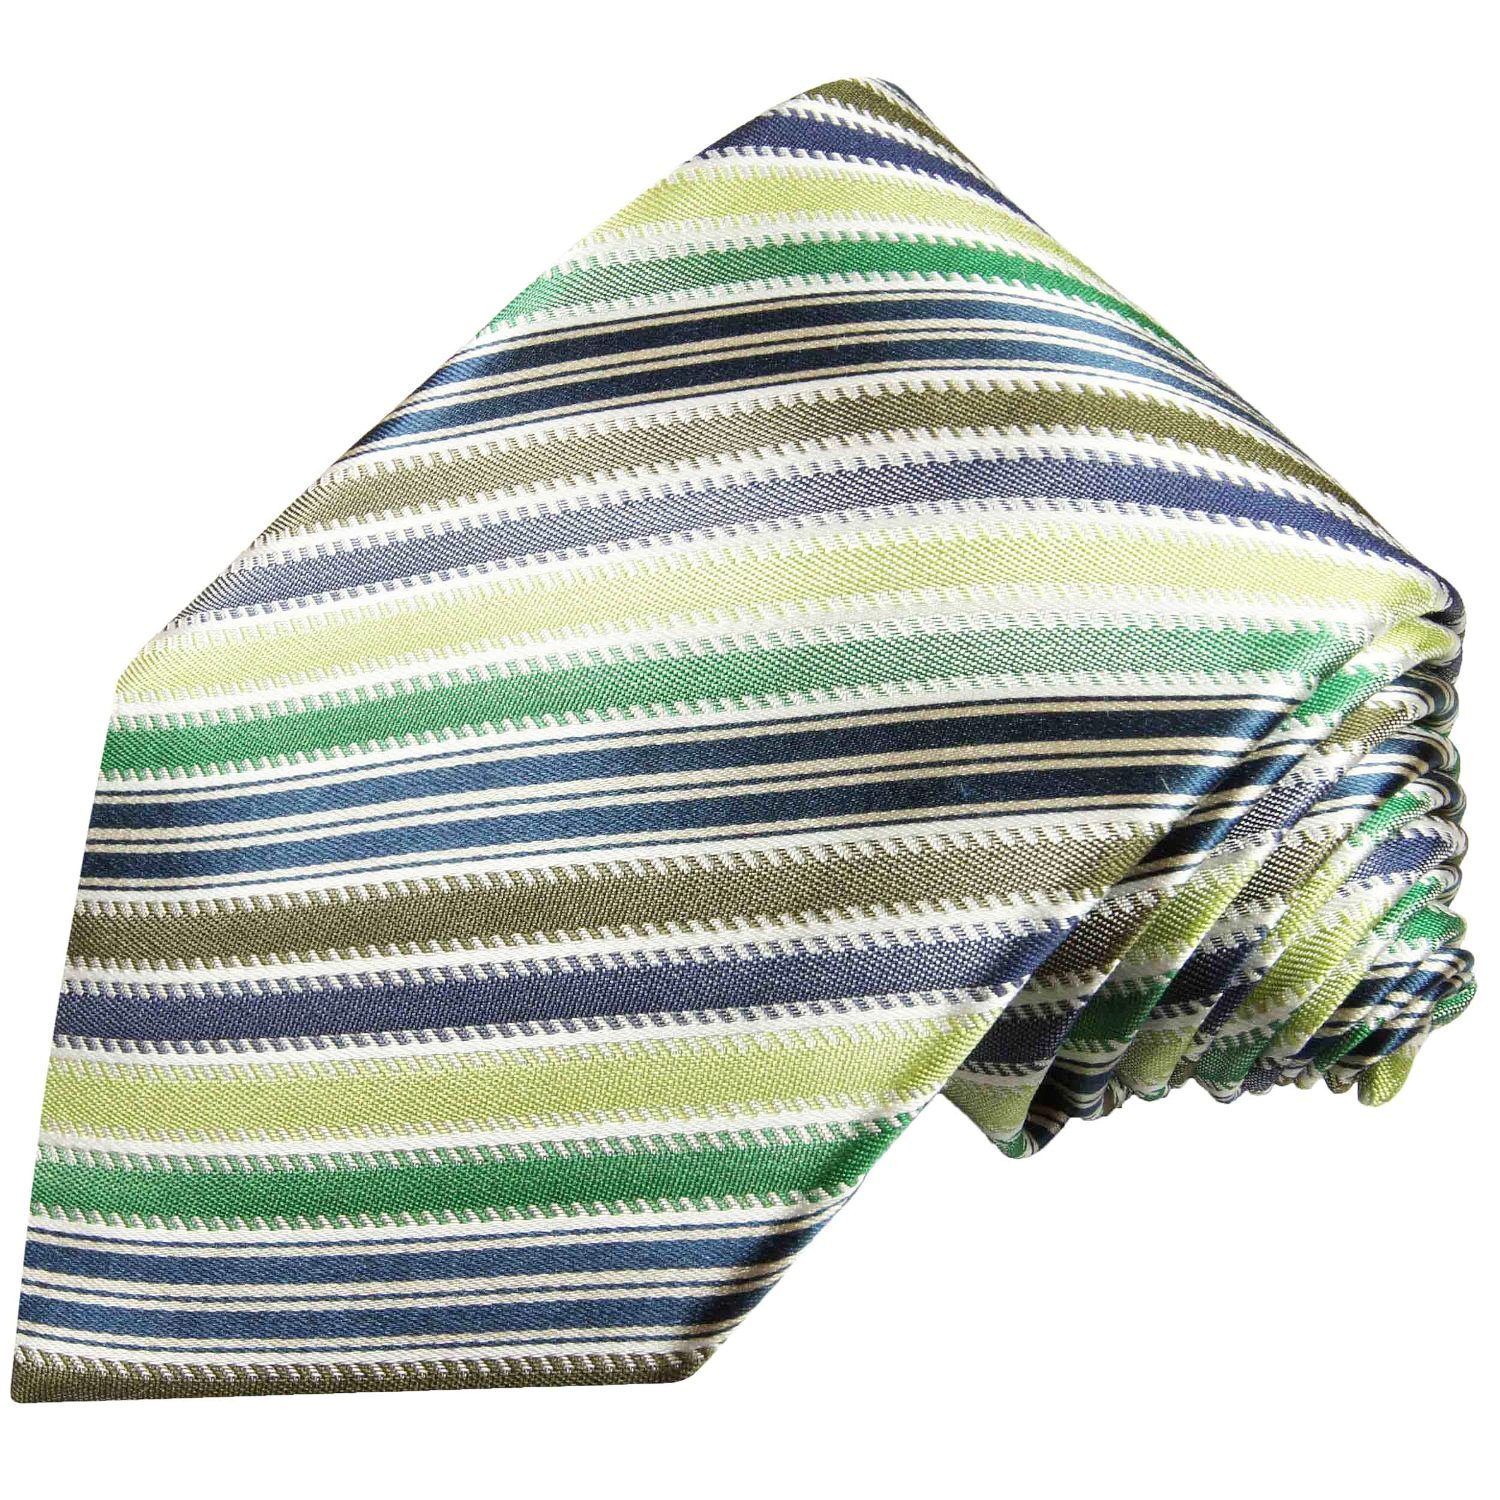 Paul Malone Krawatte Moderne Herren Seidenkrawatte gestreift 100% Seide Breit (8cm), grün grau 314